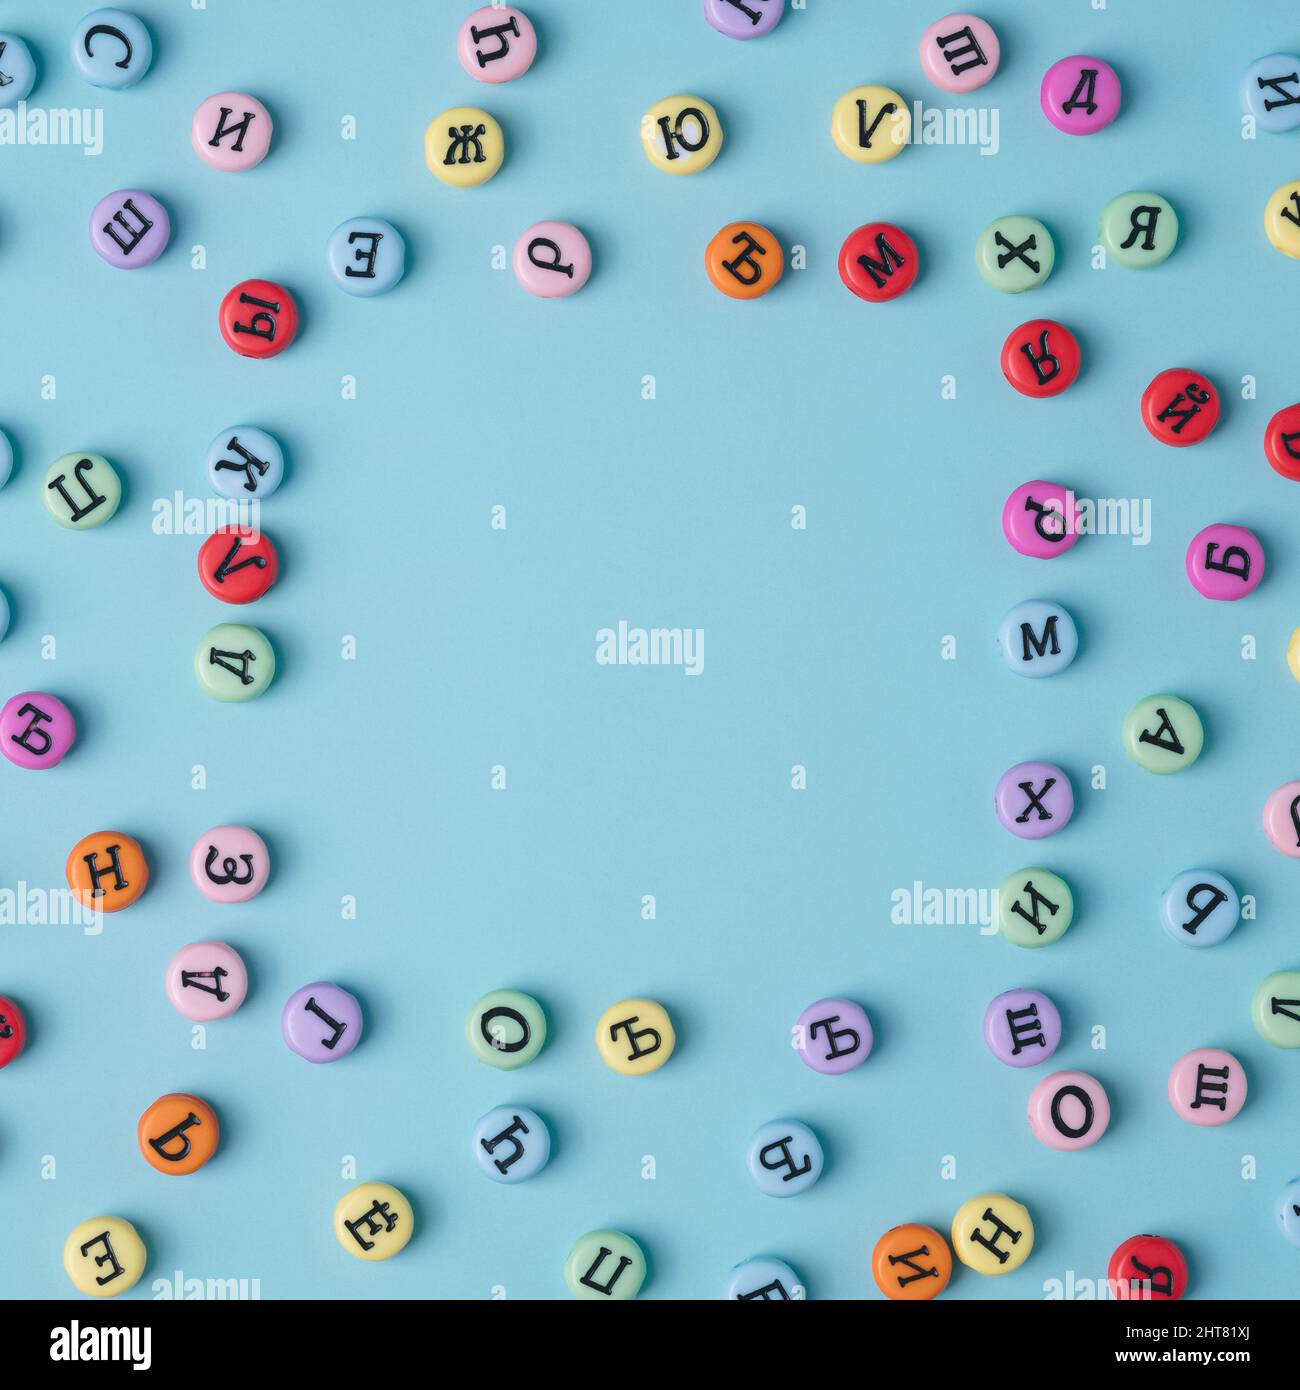 Letras cirílicas botones de colores cuadrados sobre un fondo azul pastel. Rusia, Europa del Este, telón de fondo conceptual. Foto de stock